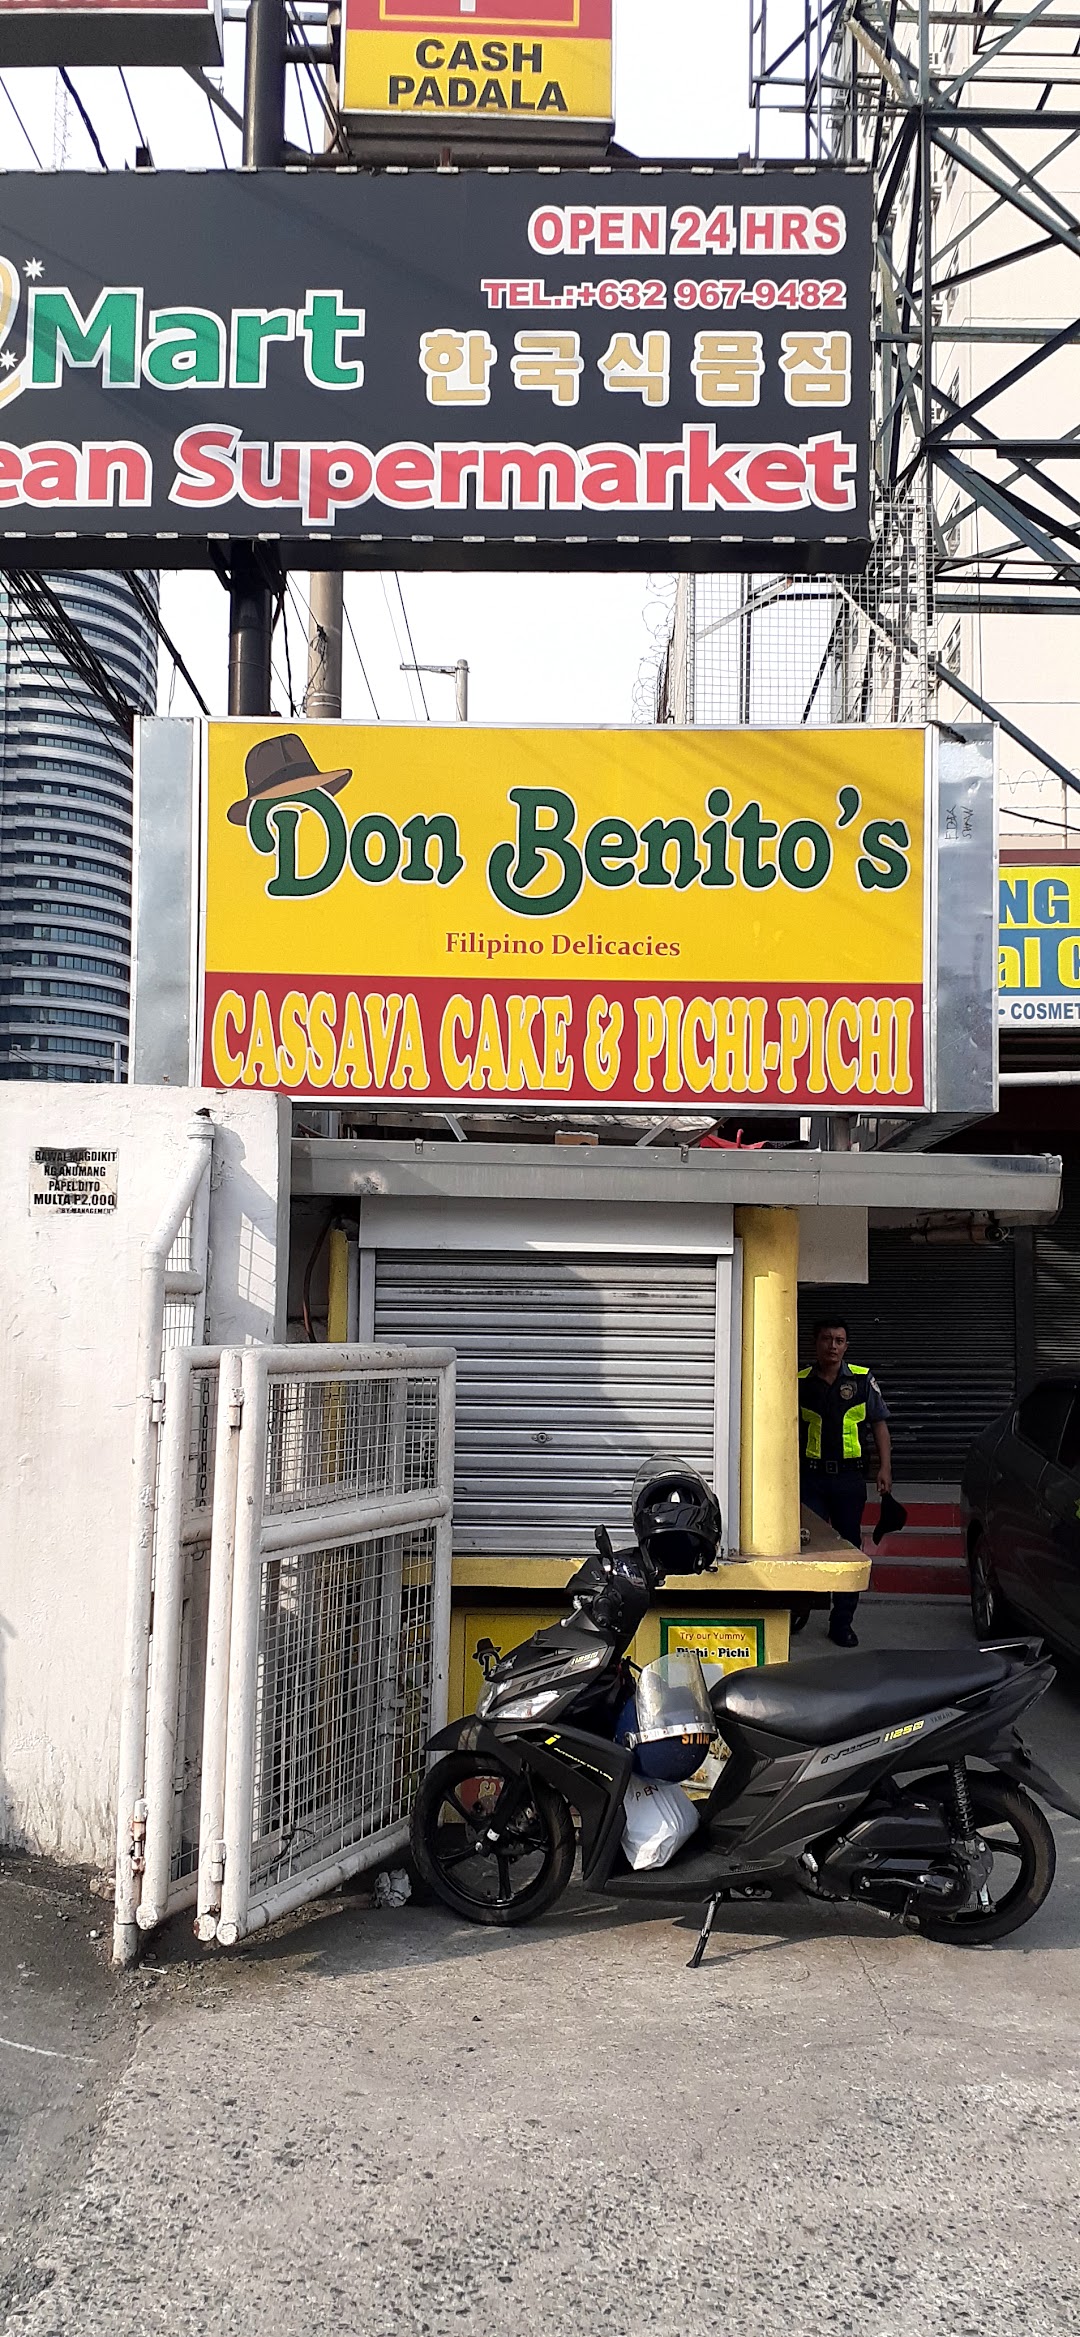 Don Benitos Cassava Cake and Pichi Pichi (EDSA Mandaluyong Branch)